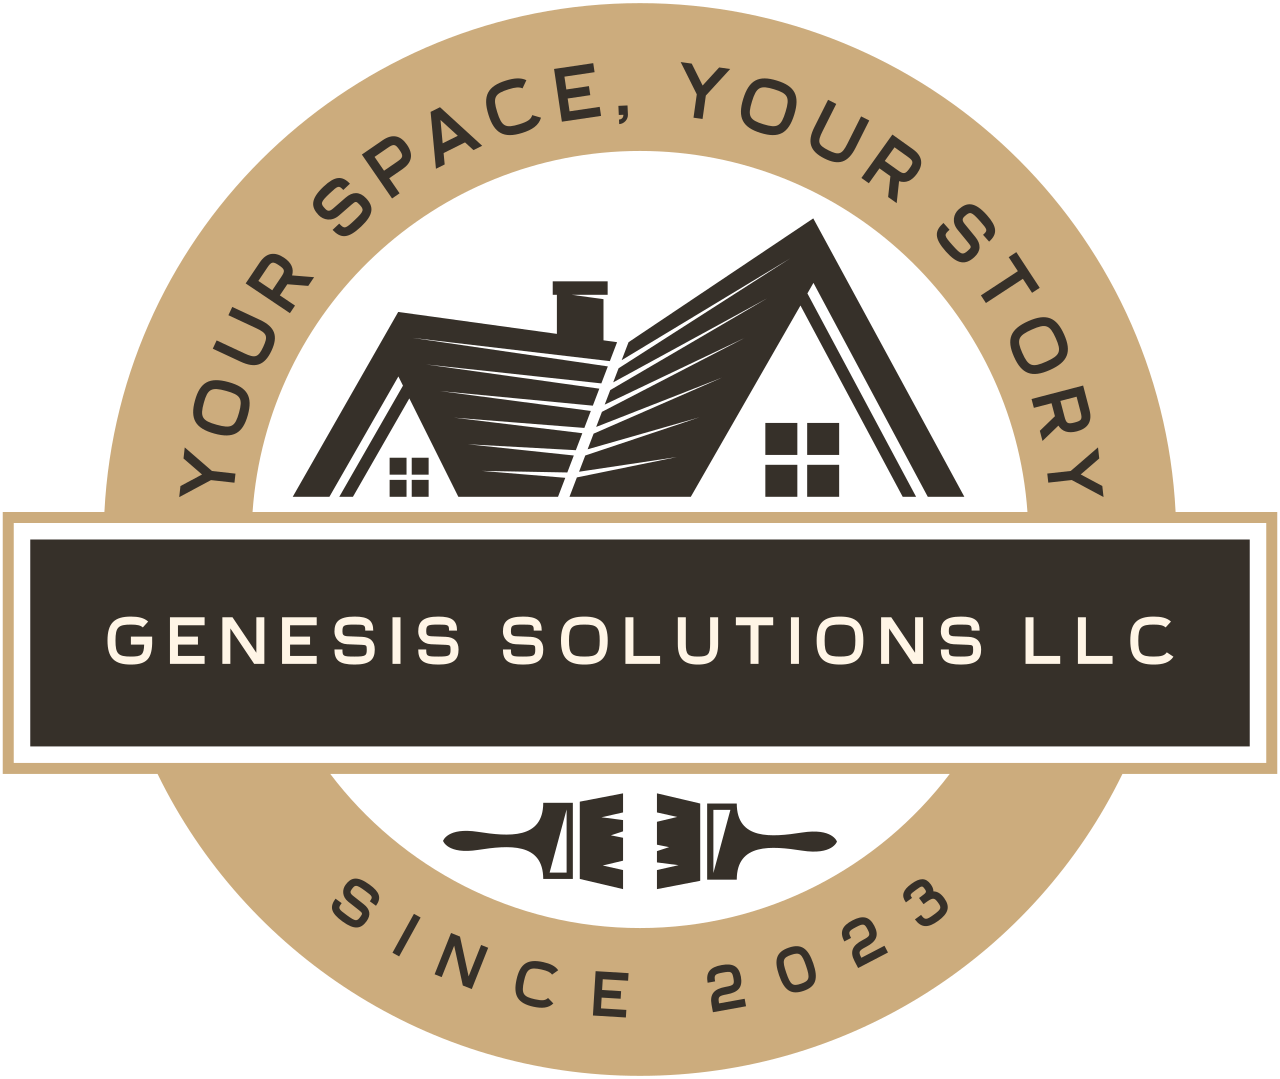 Genesis Solutions LLC's logo